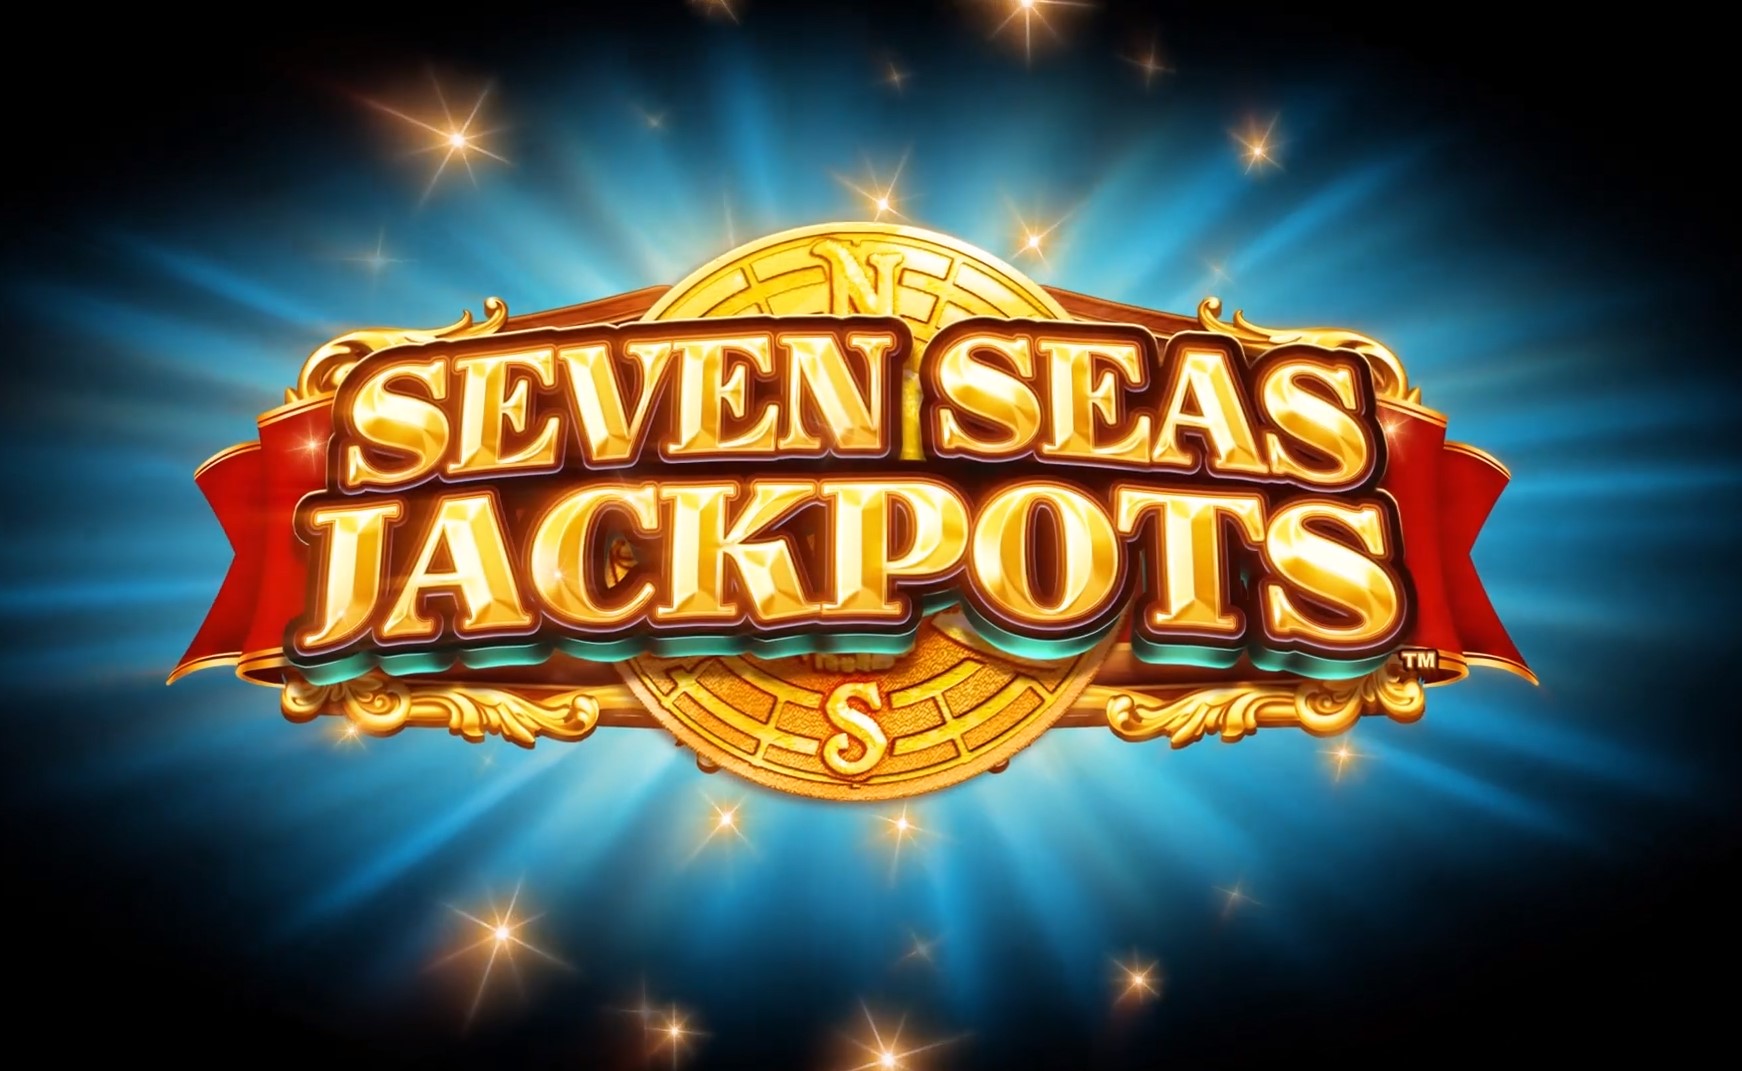 7 seas casino free games